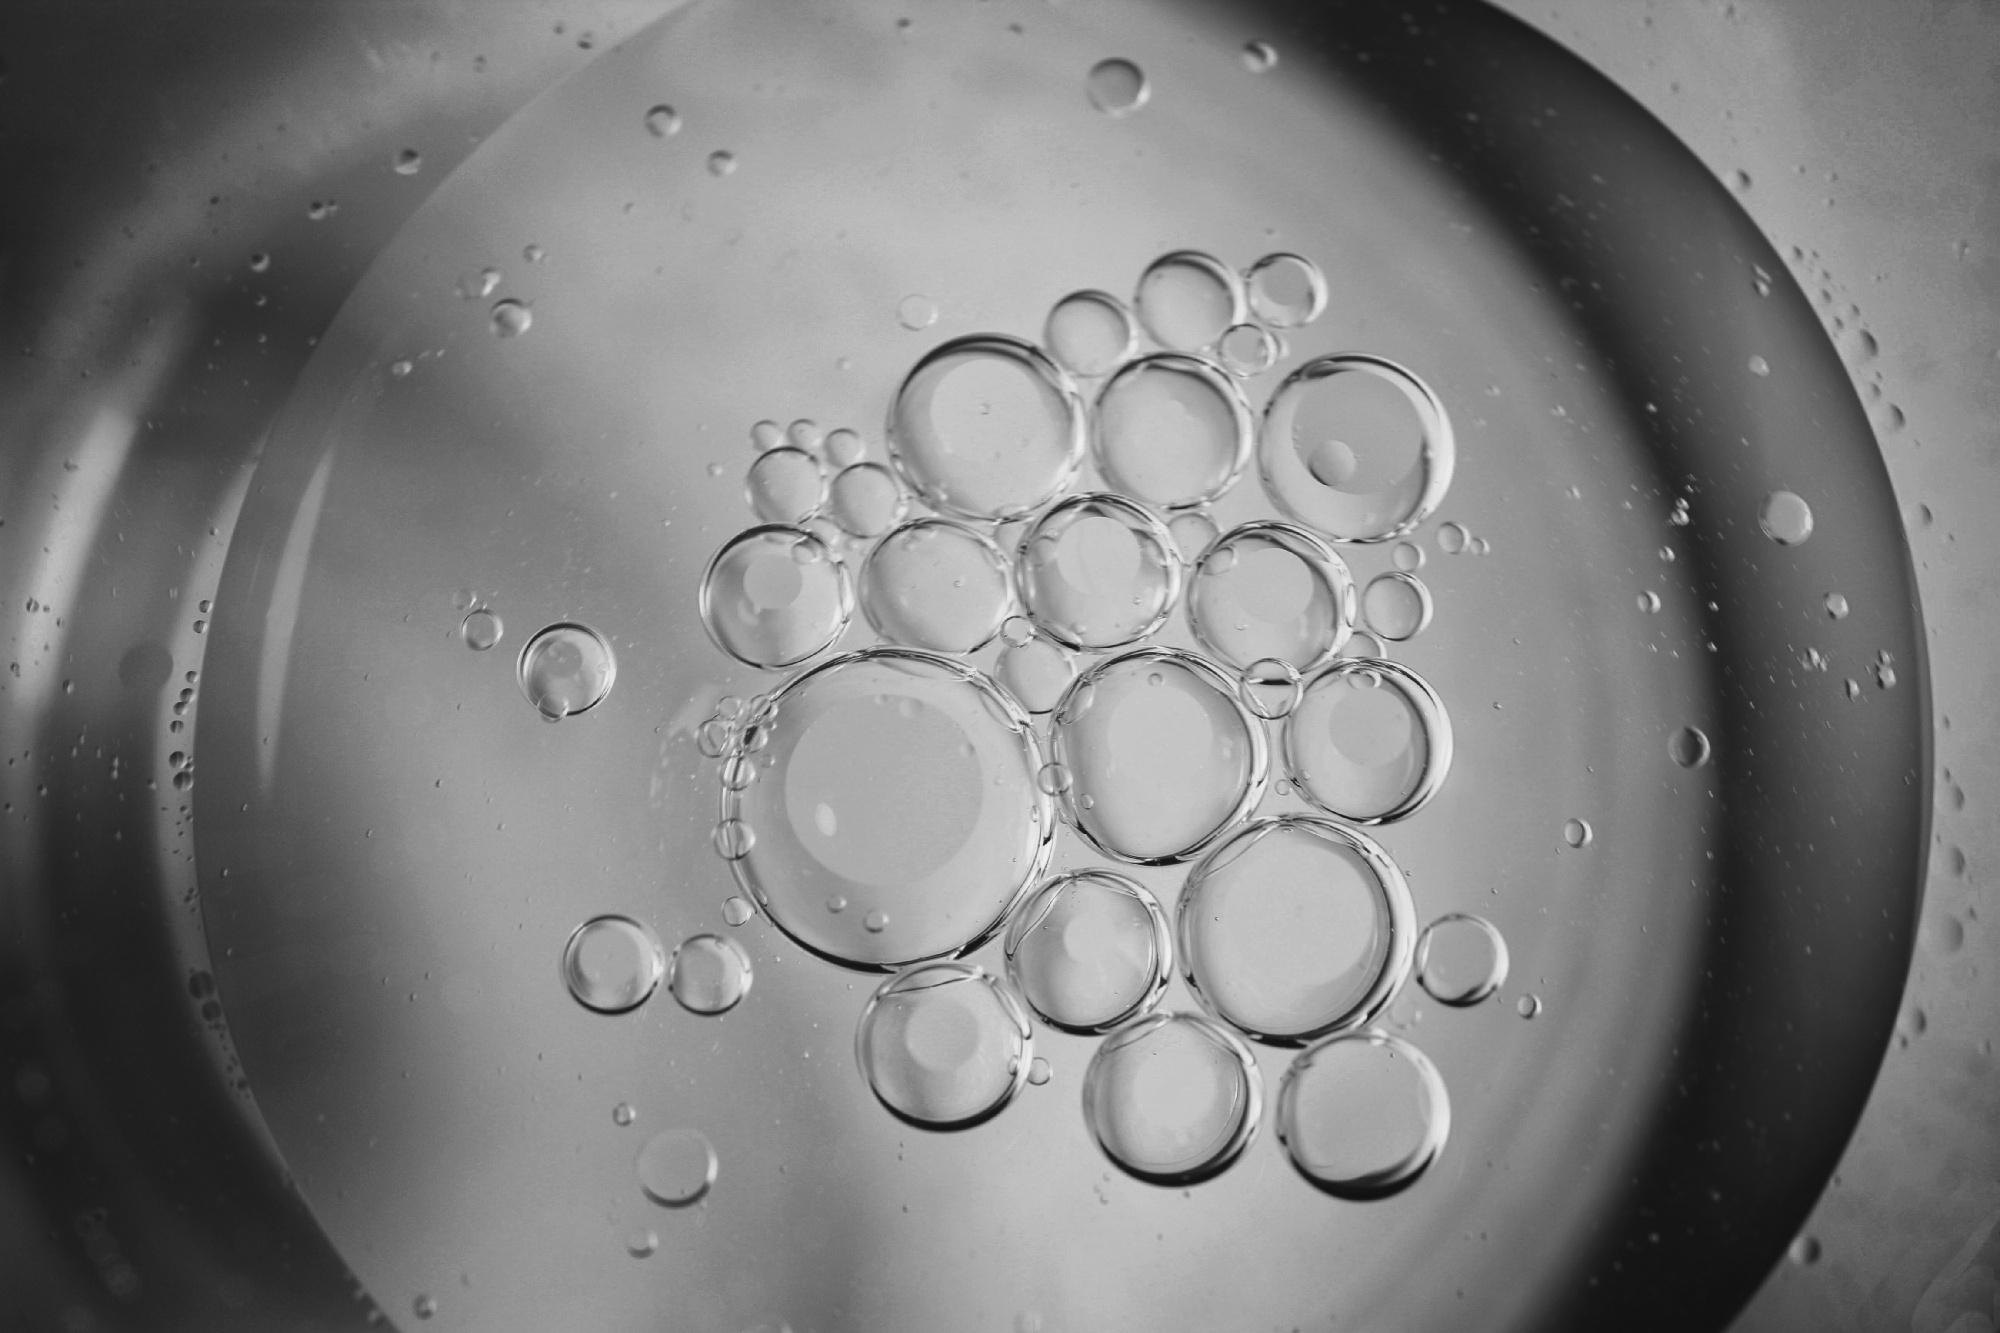 oil in water emulsion